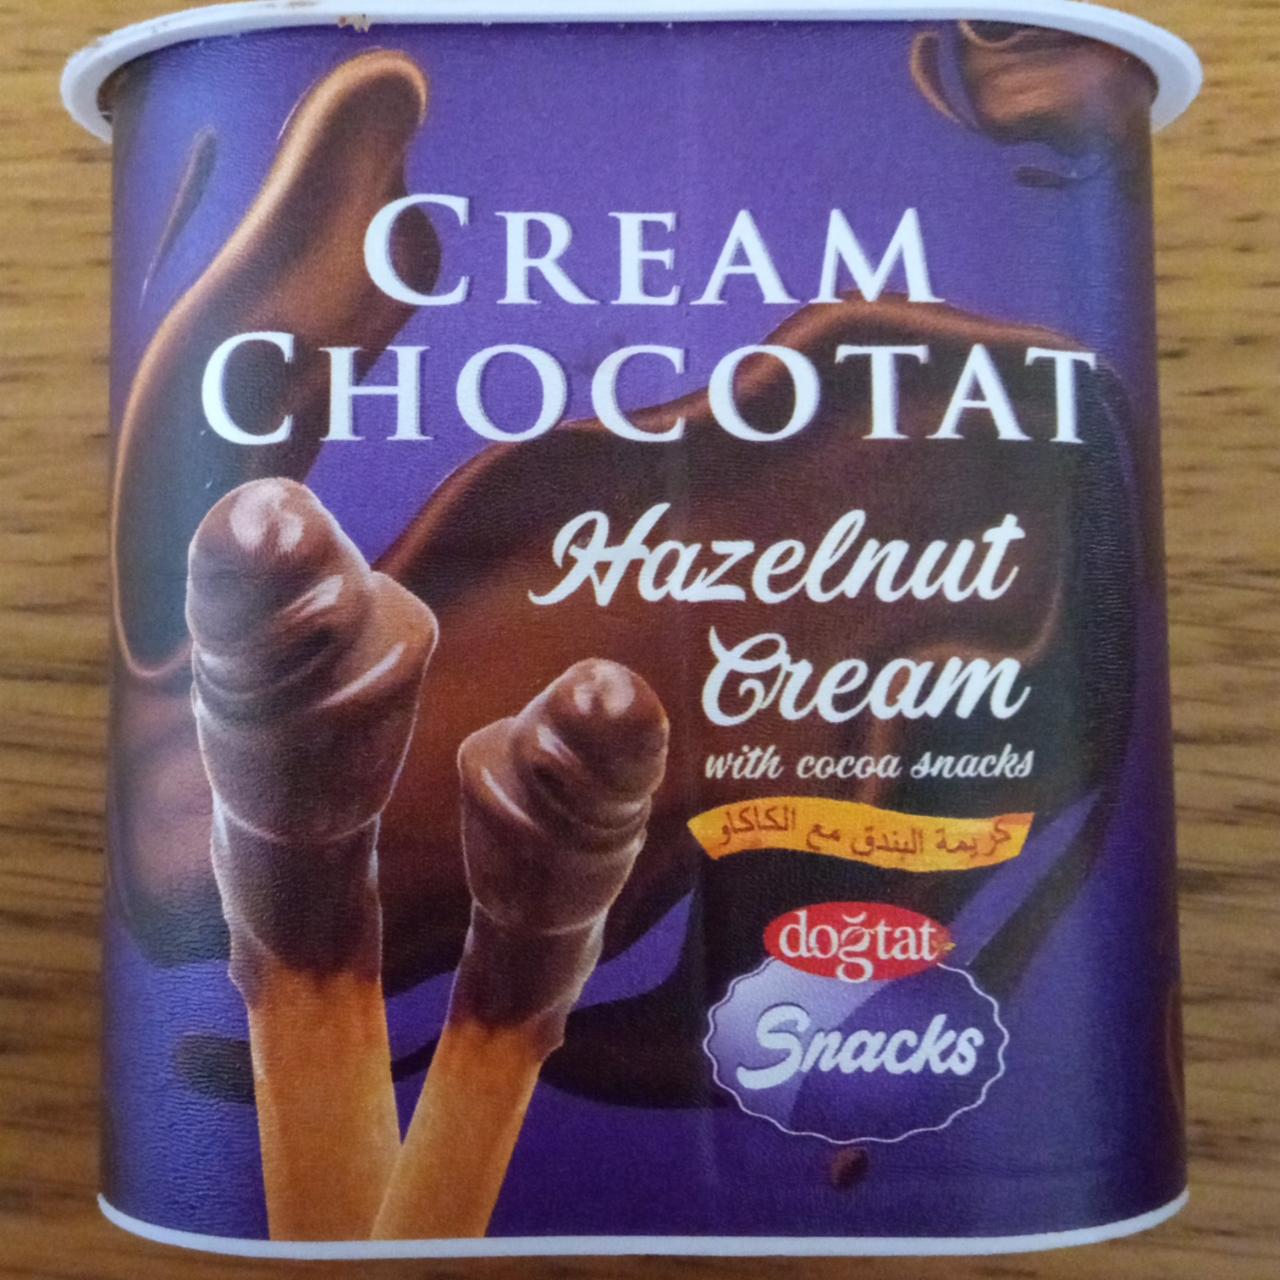 Fotografie - Cream chocotat Hazelnut cream with cocoa snacks Dogtat snacks